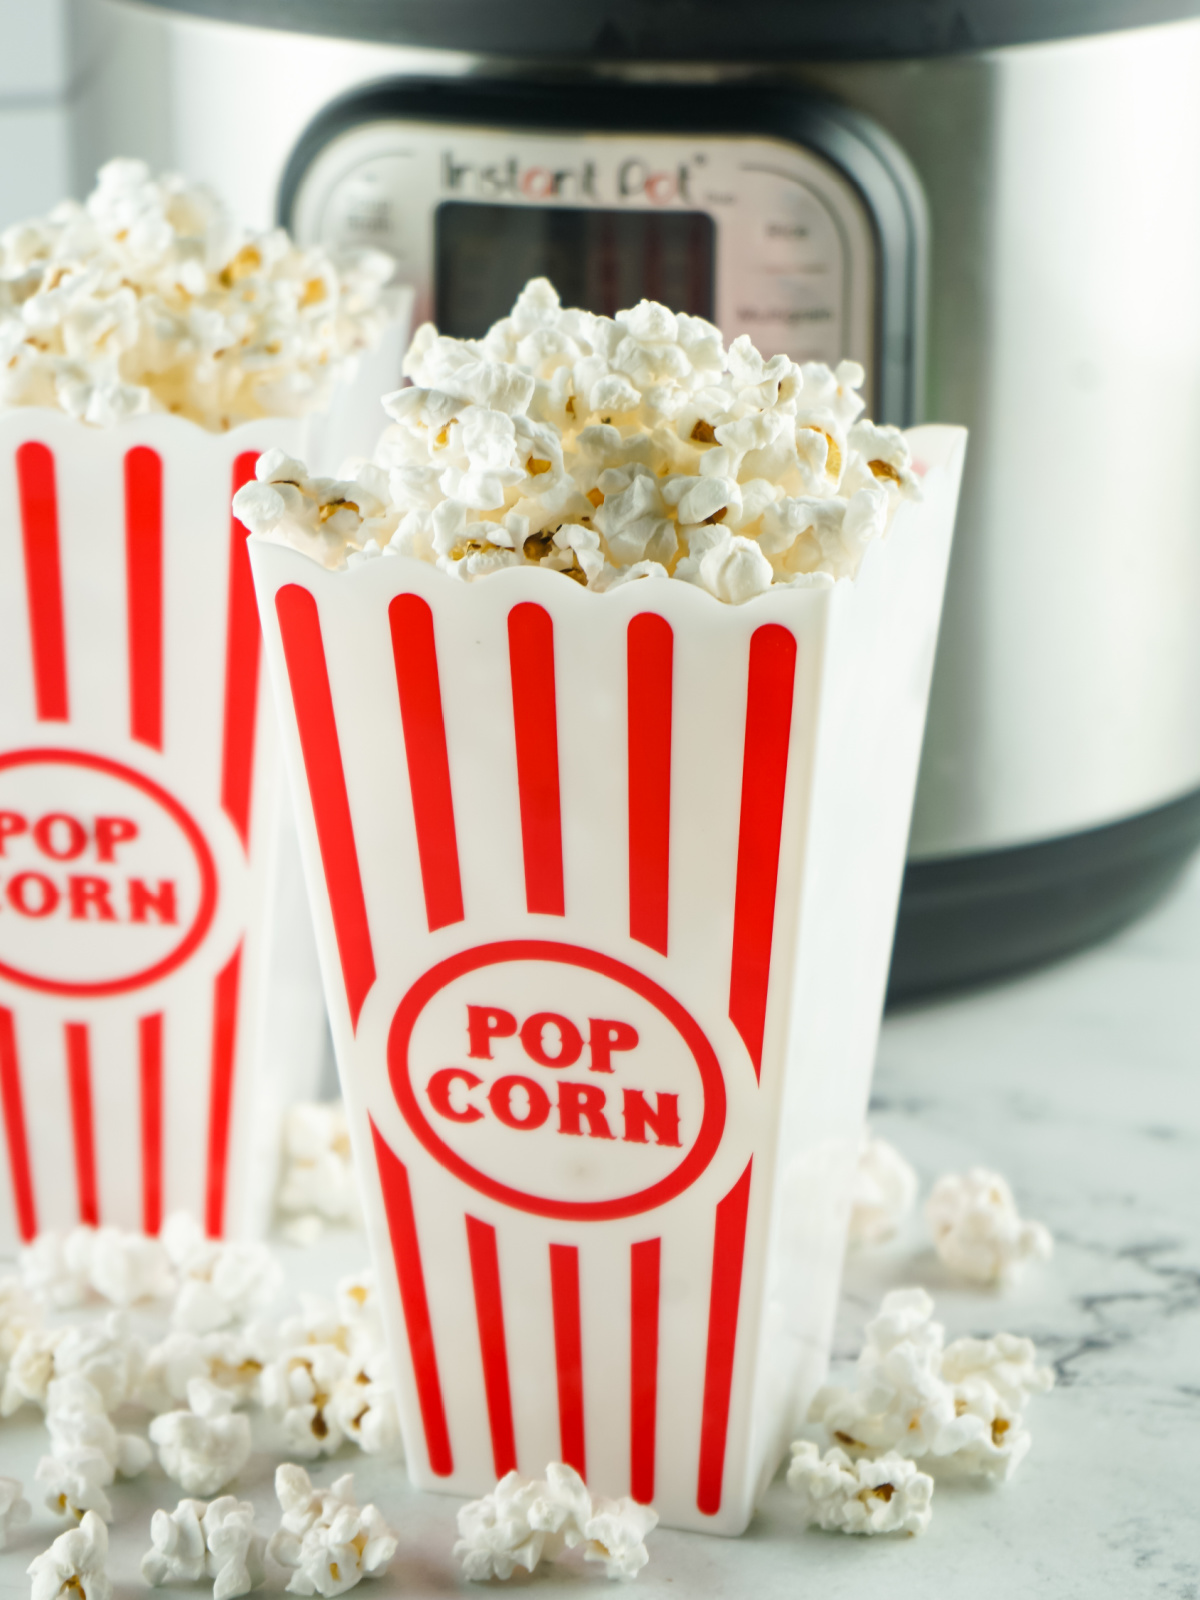 https://blogghetti.com/wp-content/uploads/2022/11/making-popcorn-in-instant-pot-is-easy.jpg